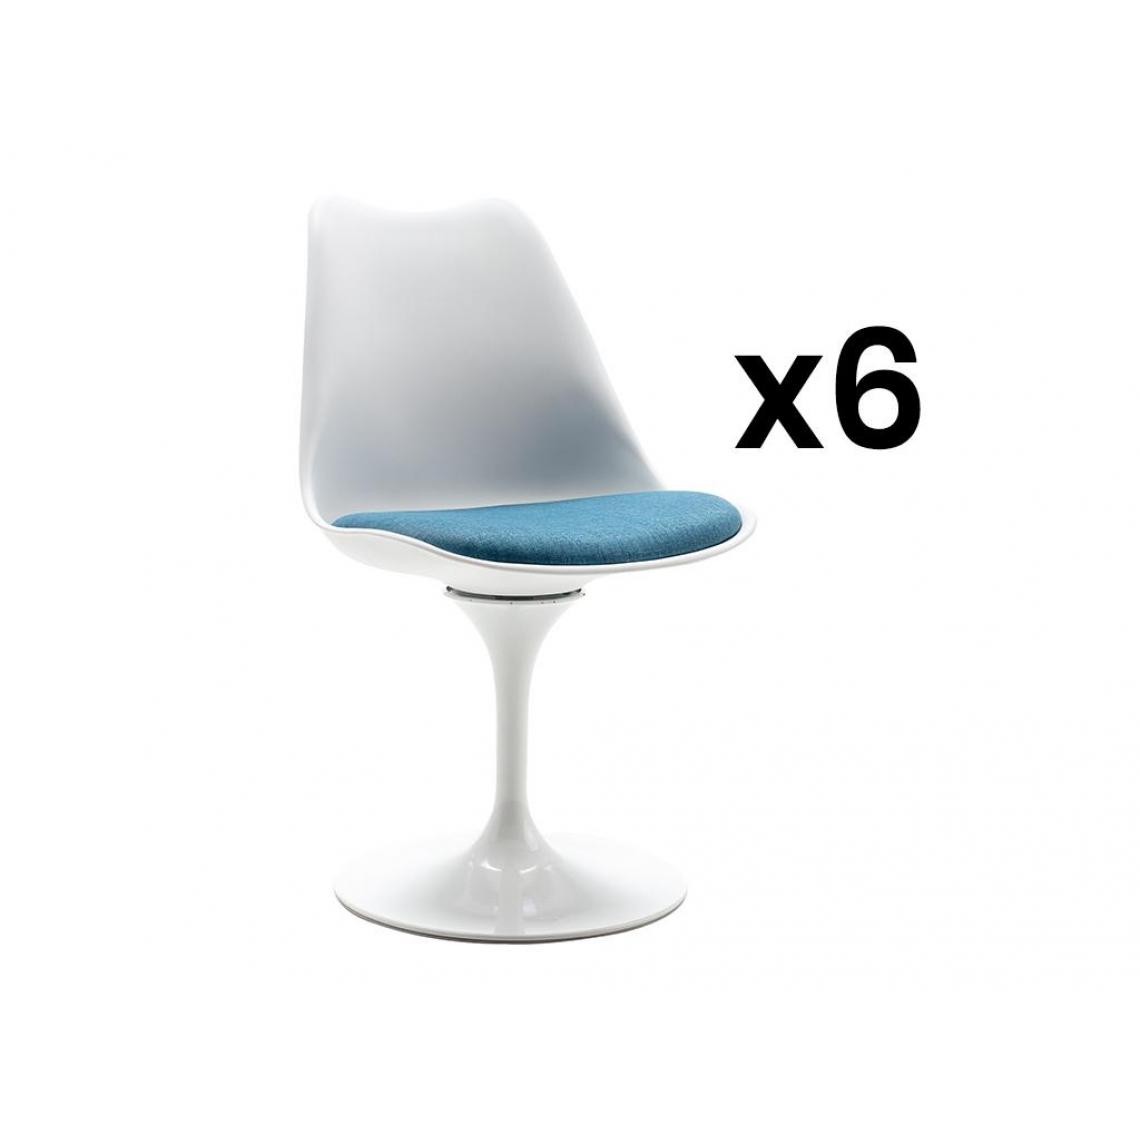 Vente-Unique - Chaise XAFY - Chaises